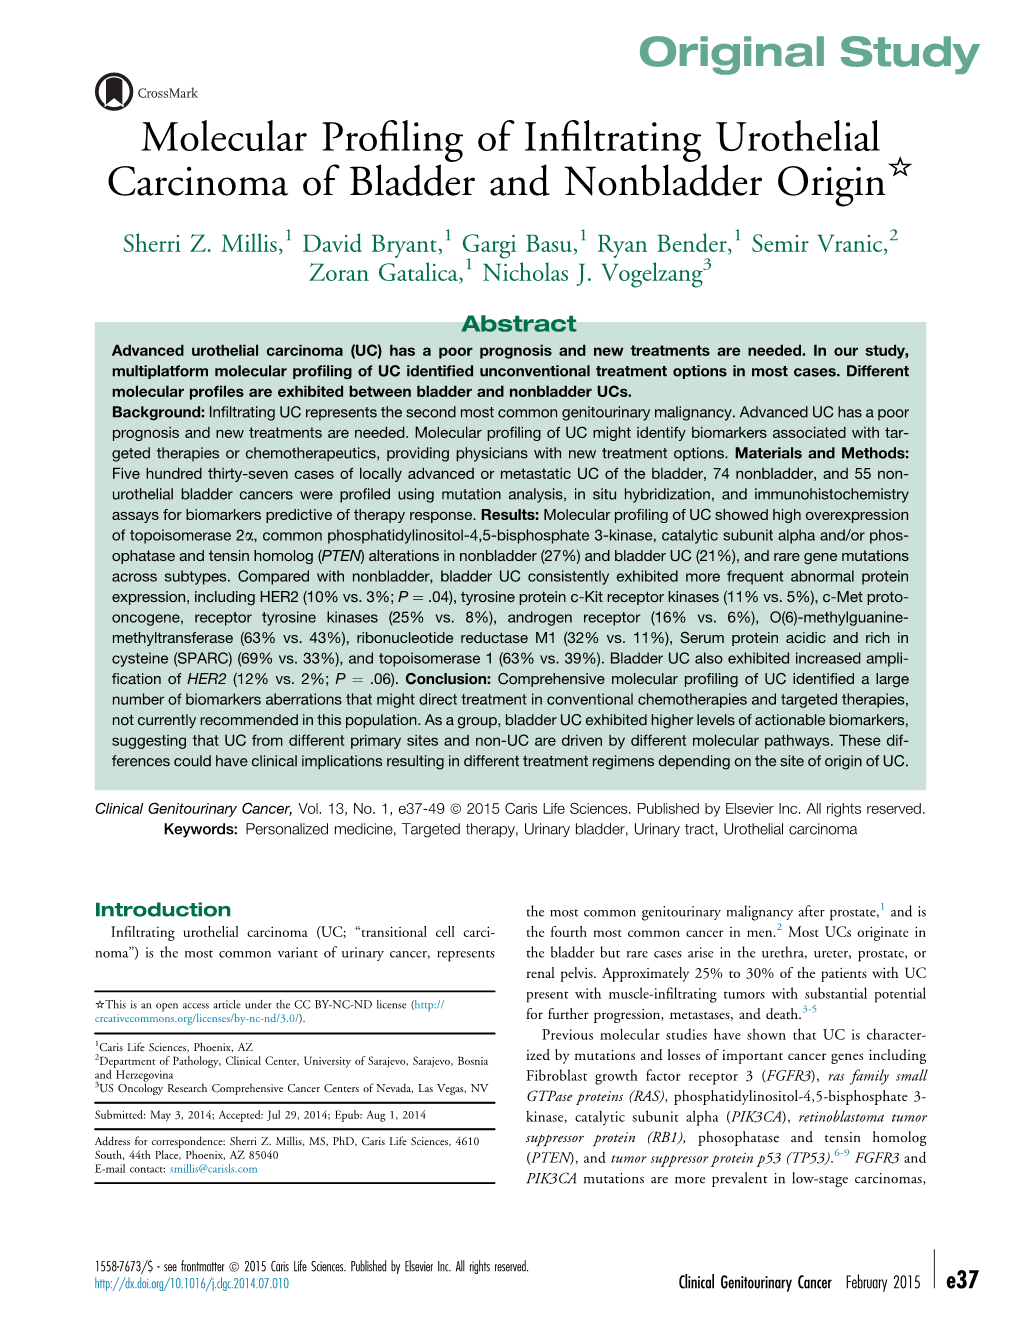 Molecular Profiling of Infiltrating Urothelial Carcinoma of Bladder